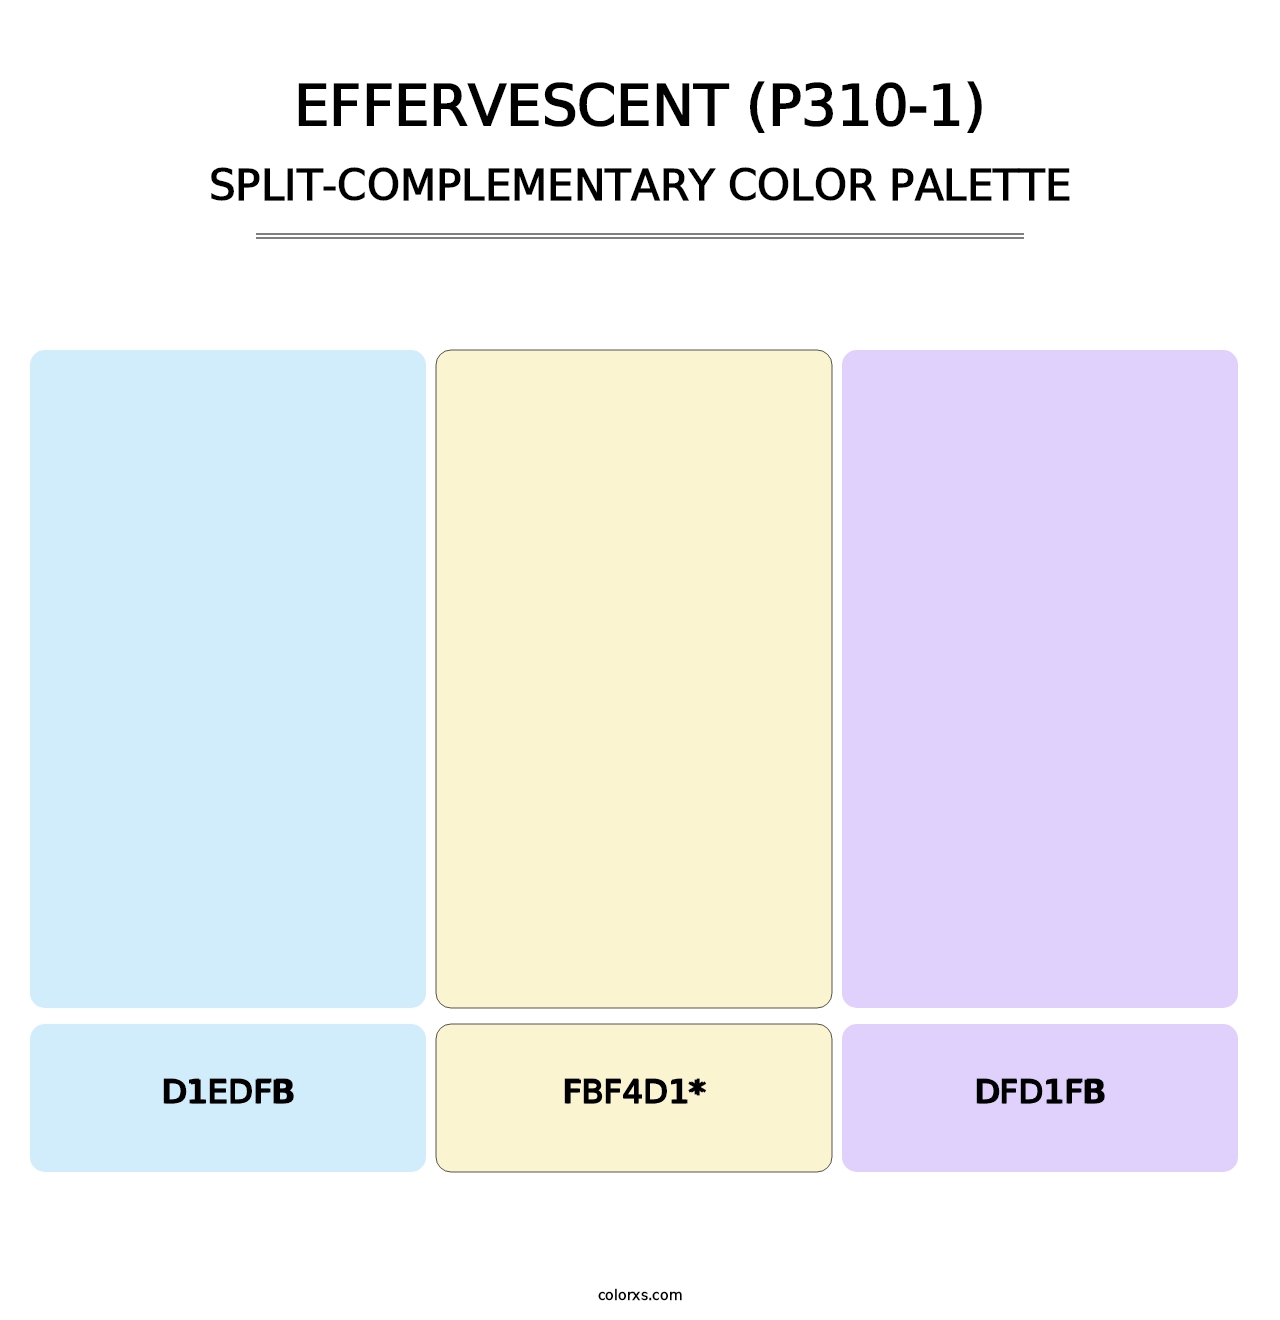 Effervescent (P310-1) - Split-Complementary Color Palette